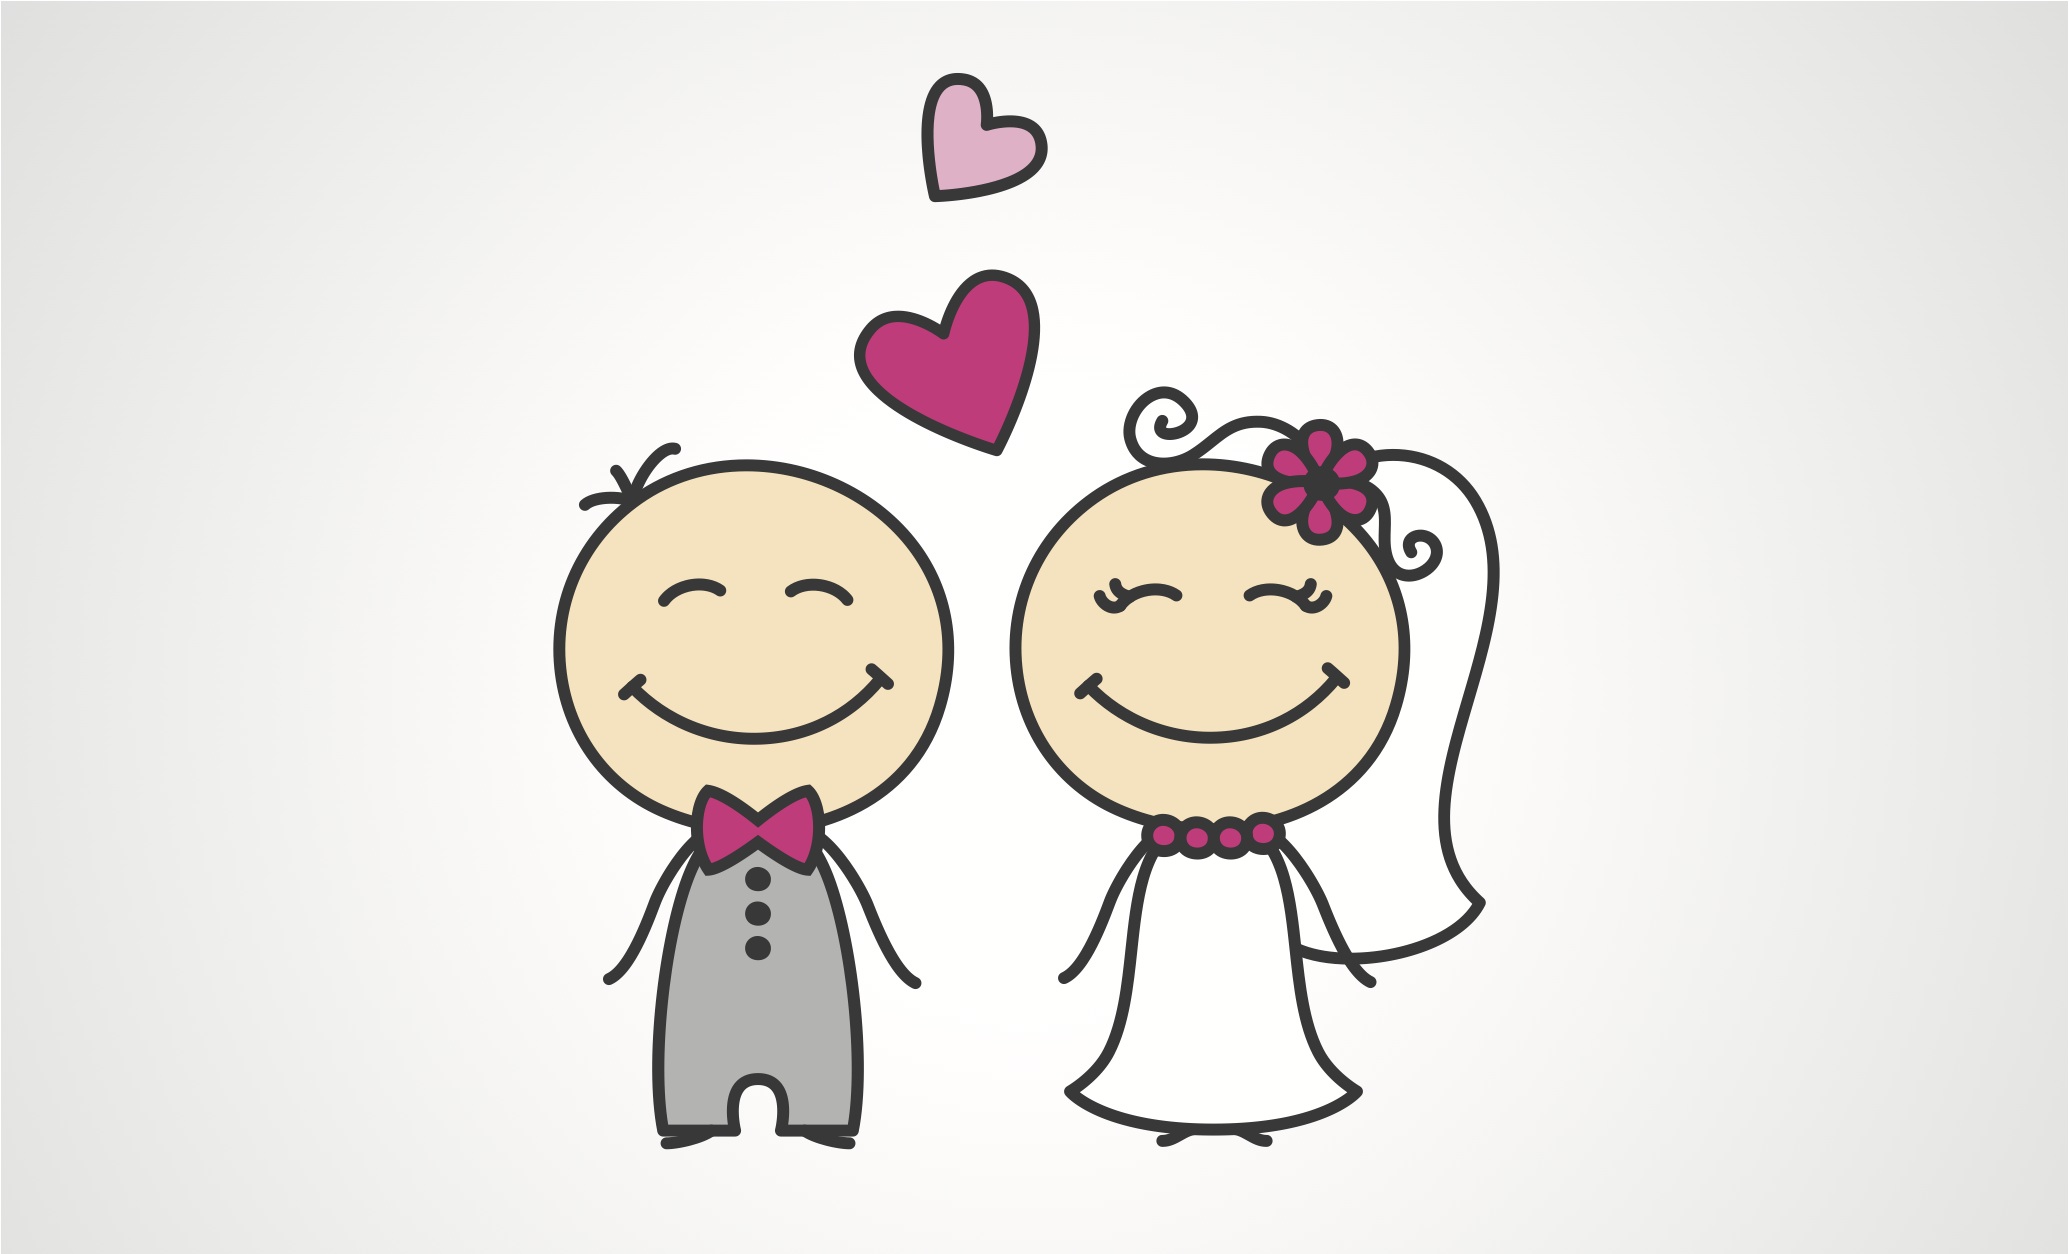 http://vanessasantilli.com/wp-content/uploads/2014/04/marriage-2.jpg